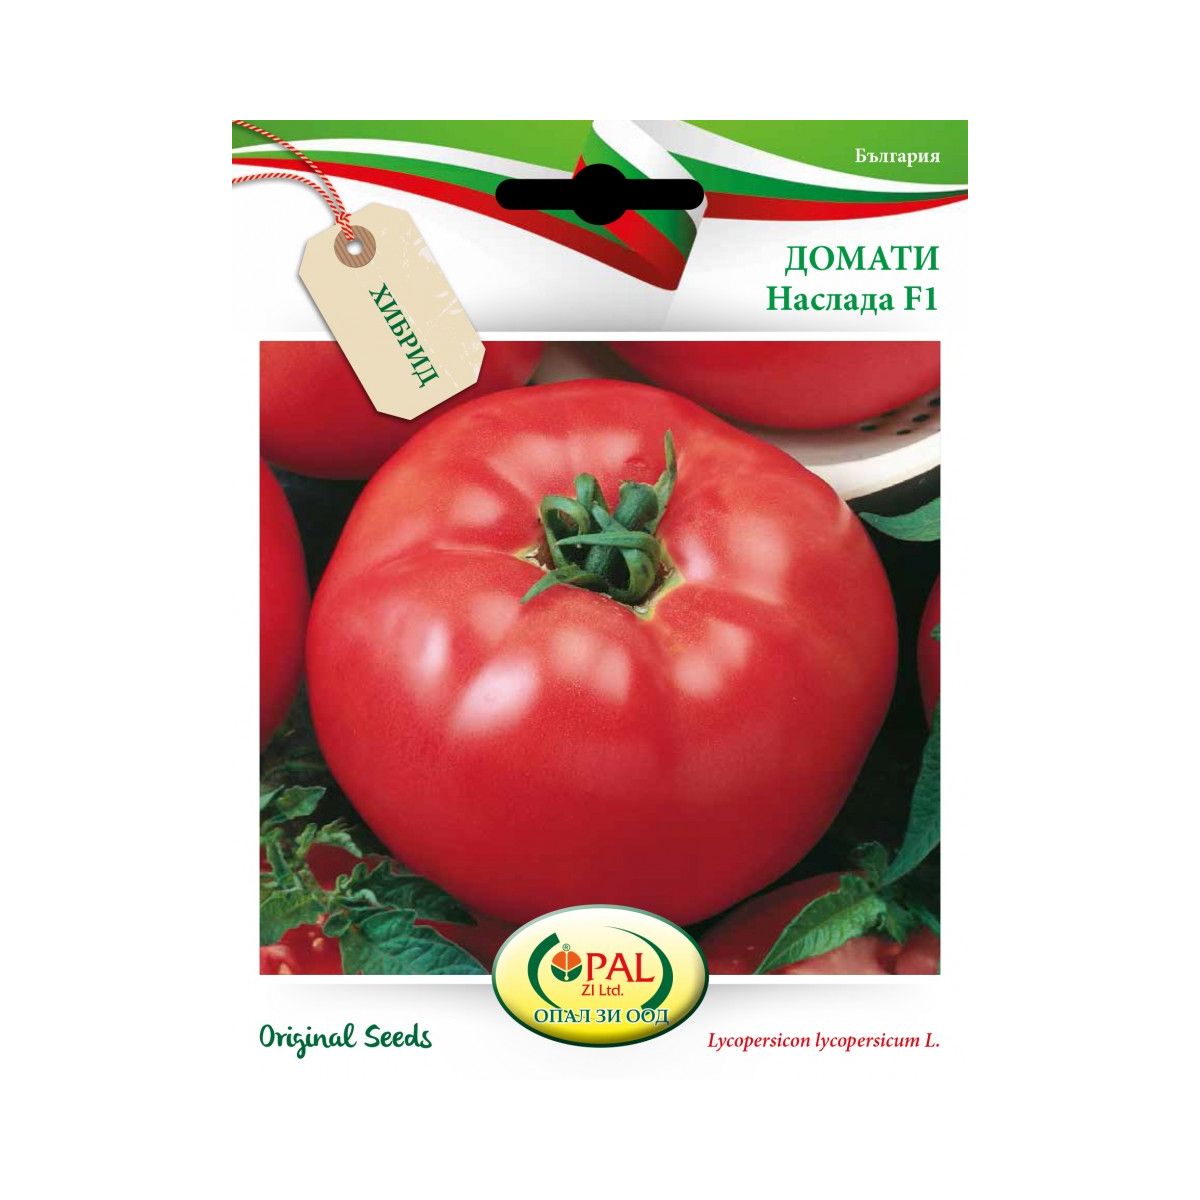 Tomate - Seminte de tomate Naslada F1, 1 grame OPAL, hectarul.ro